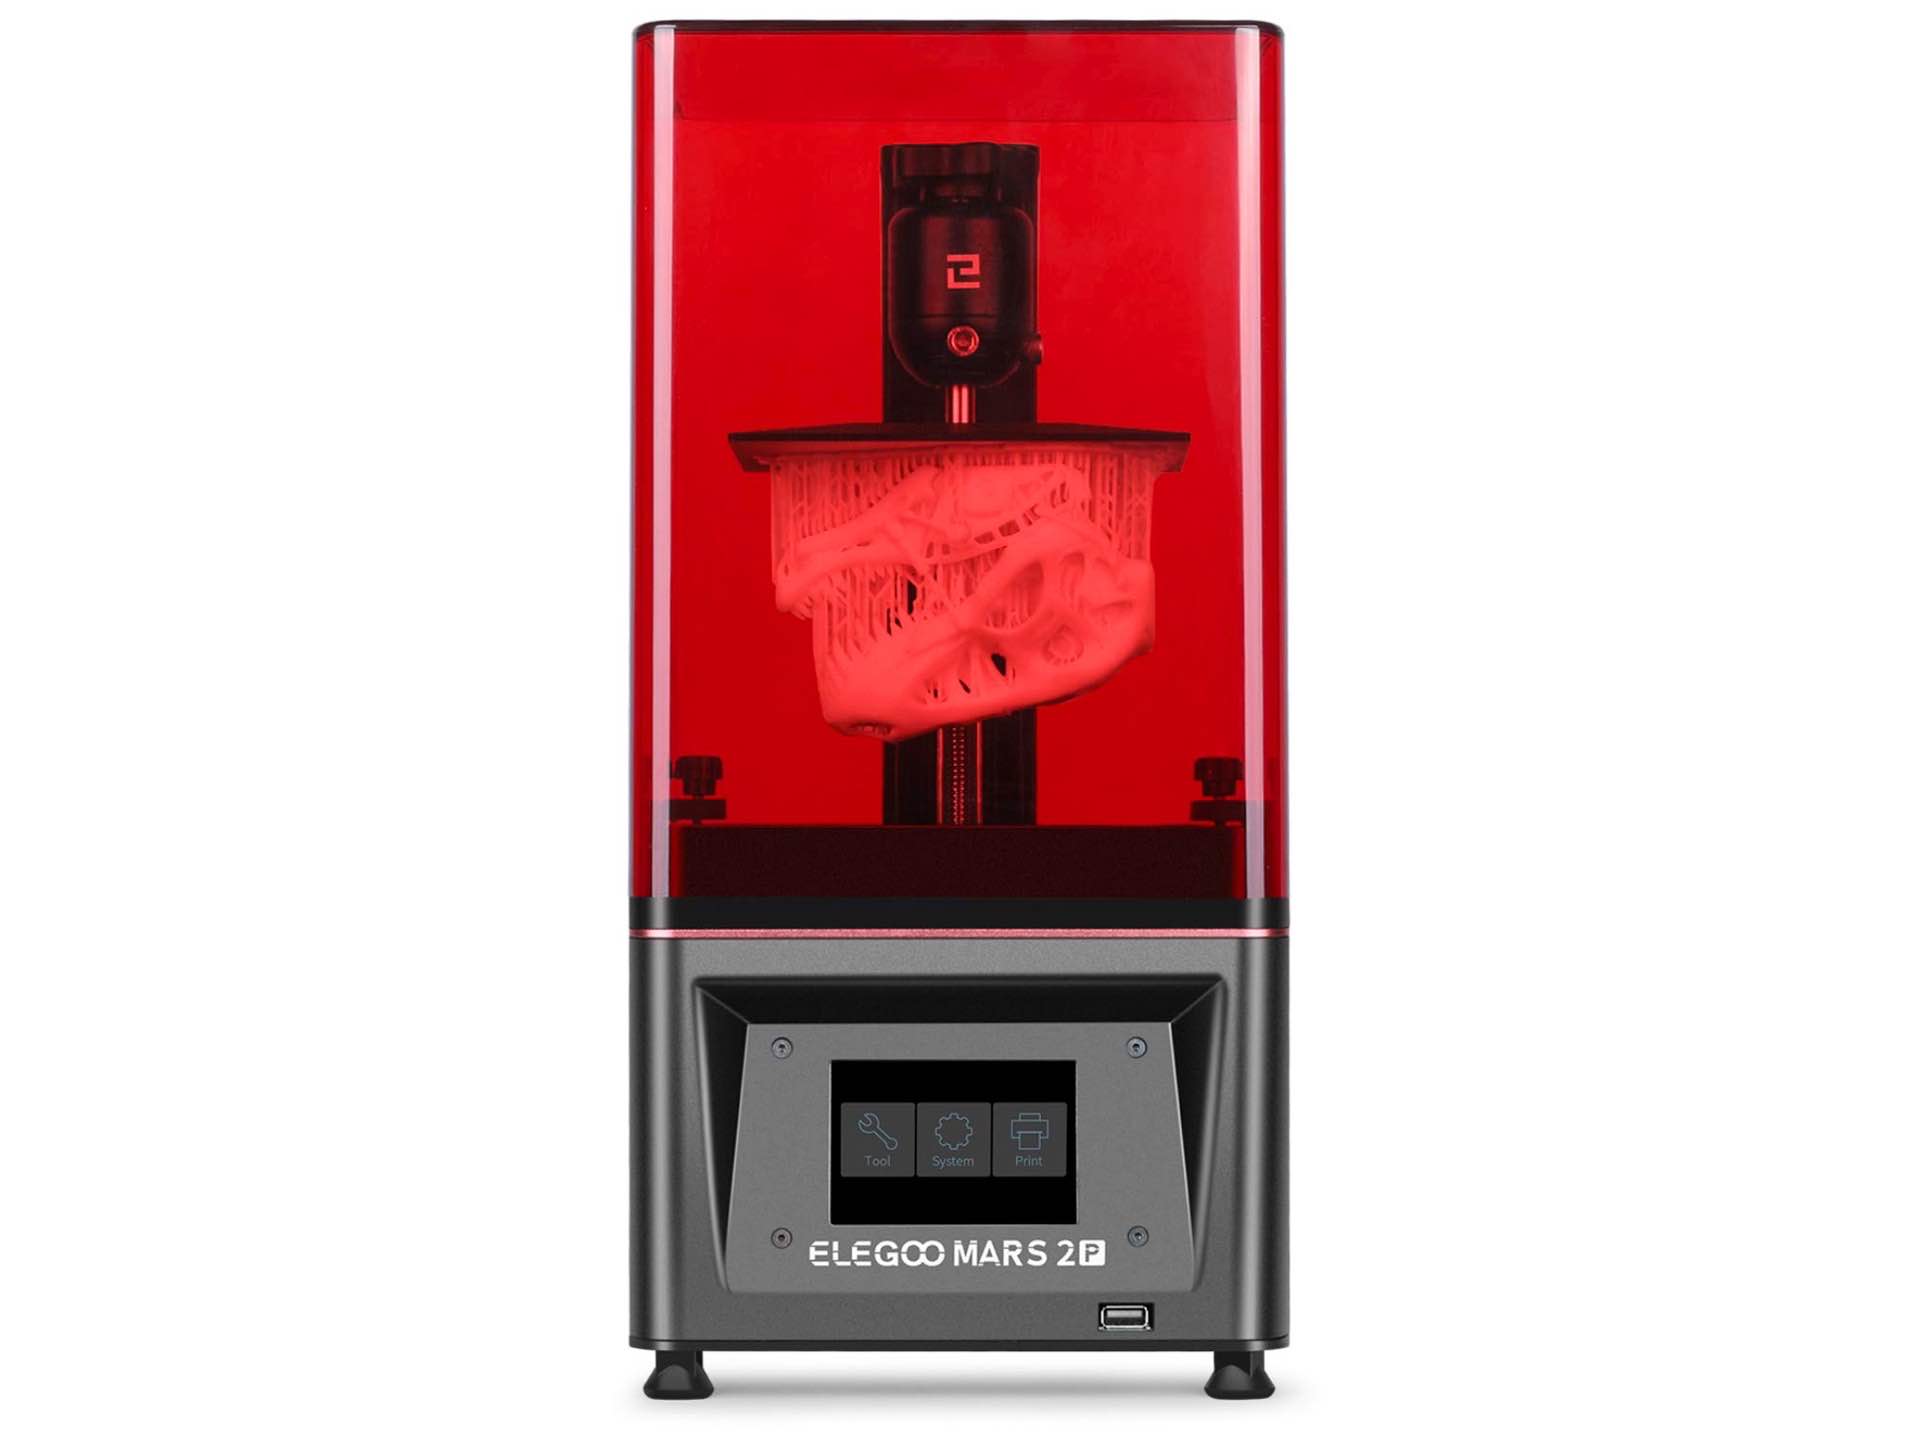 Elegoo Mars 2 Pro 3D printer. ($300)